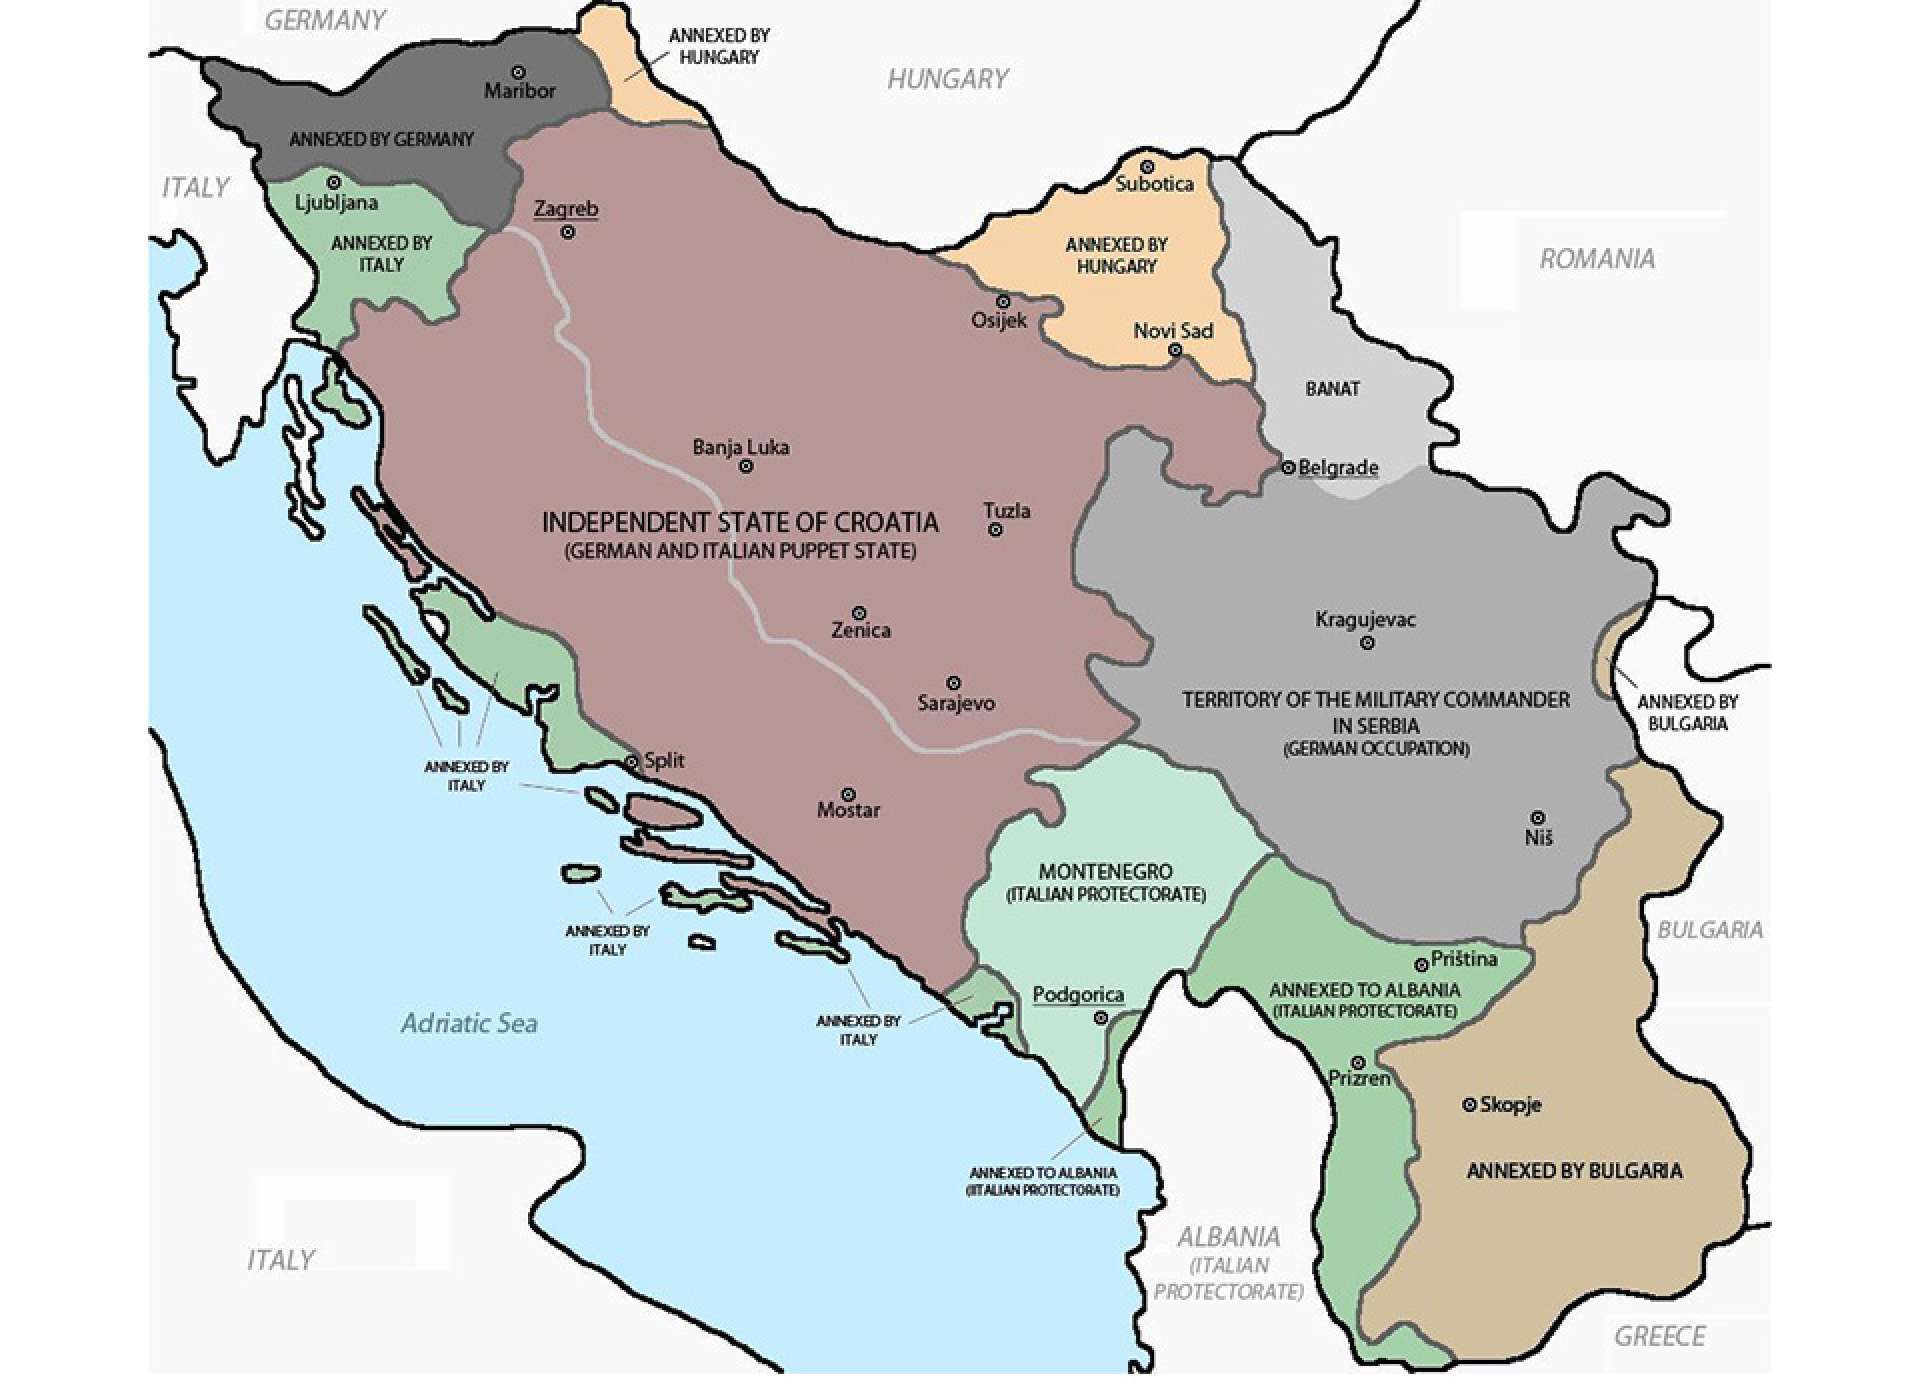 Political boundaries in Yugoslavia during World War II 